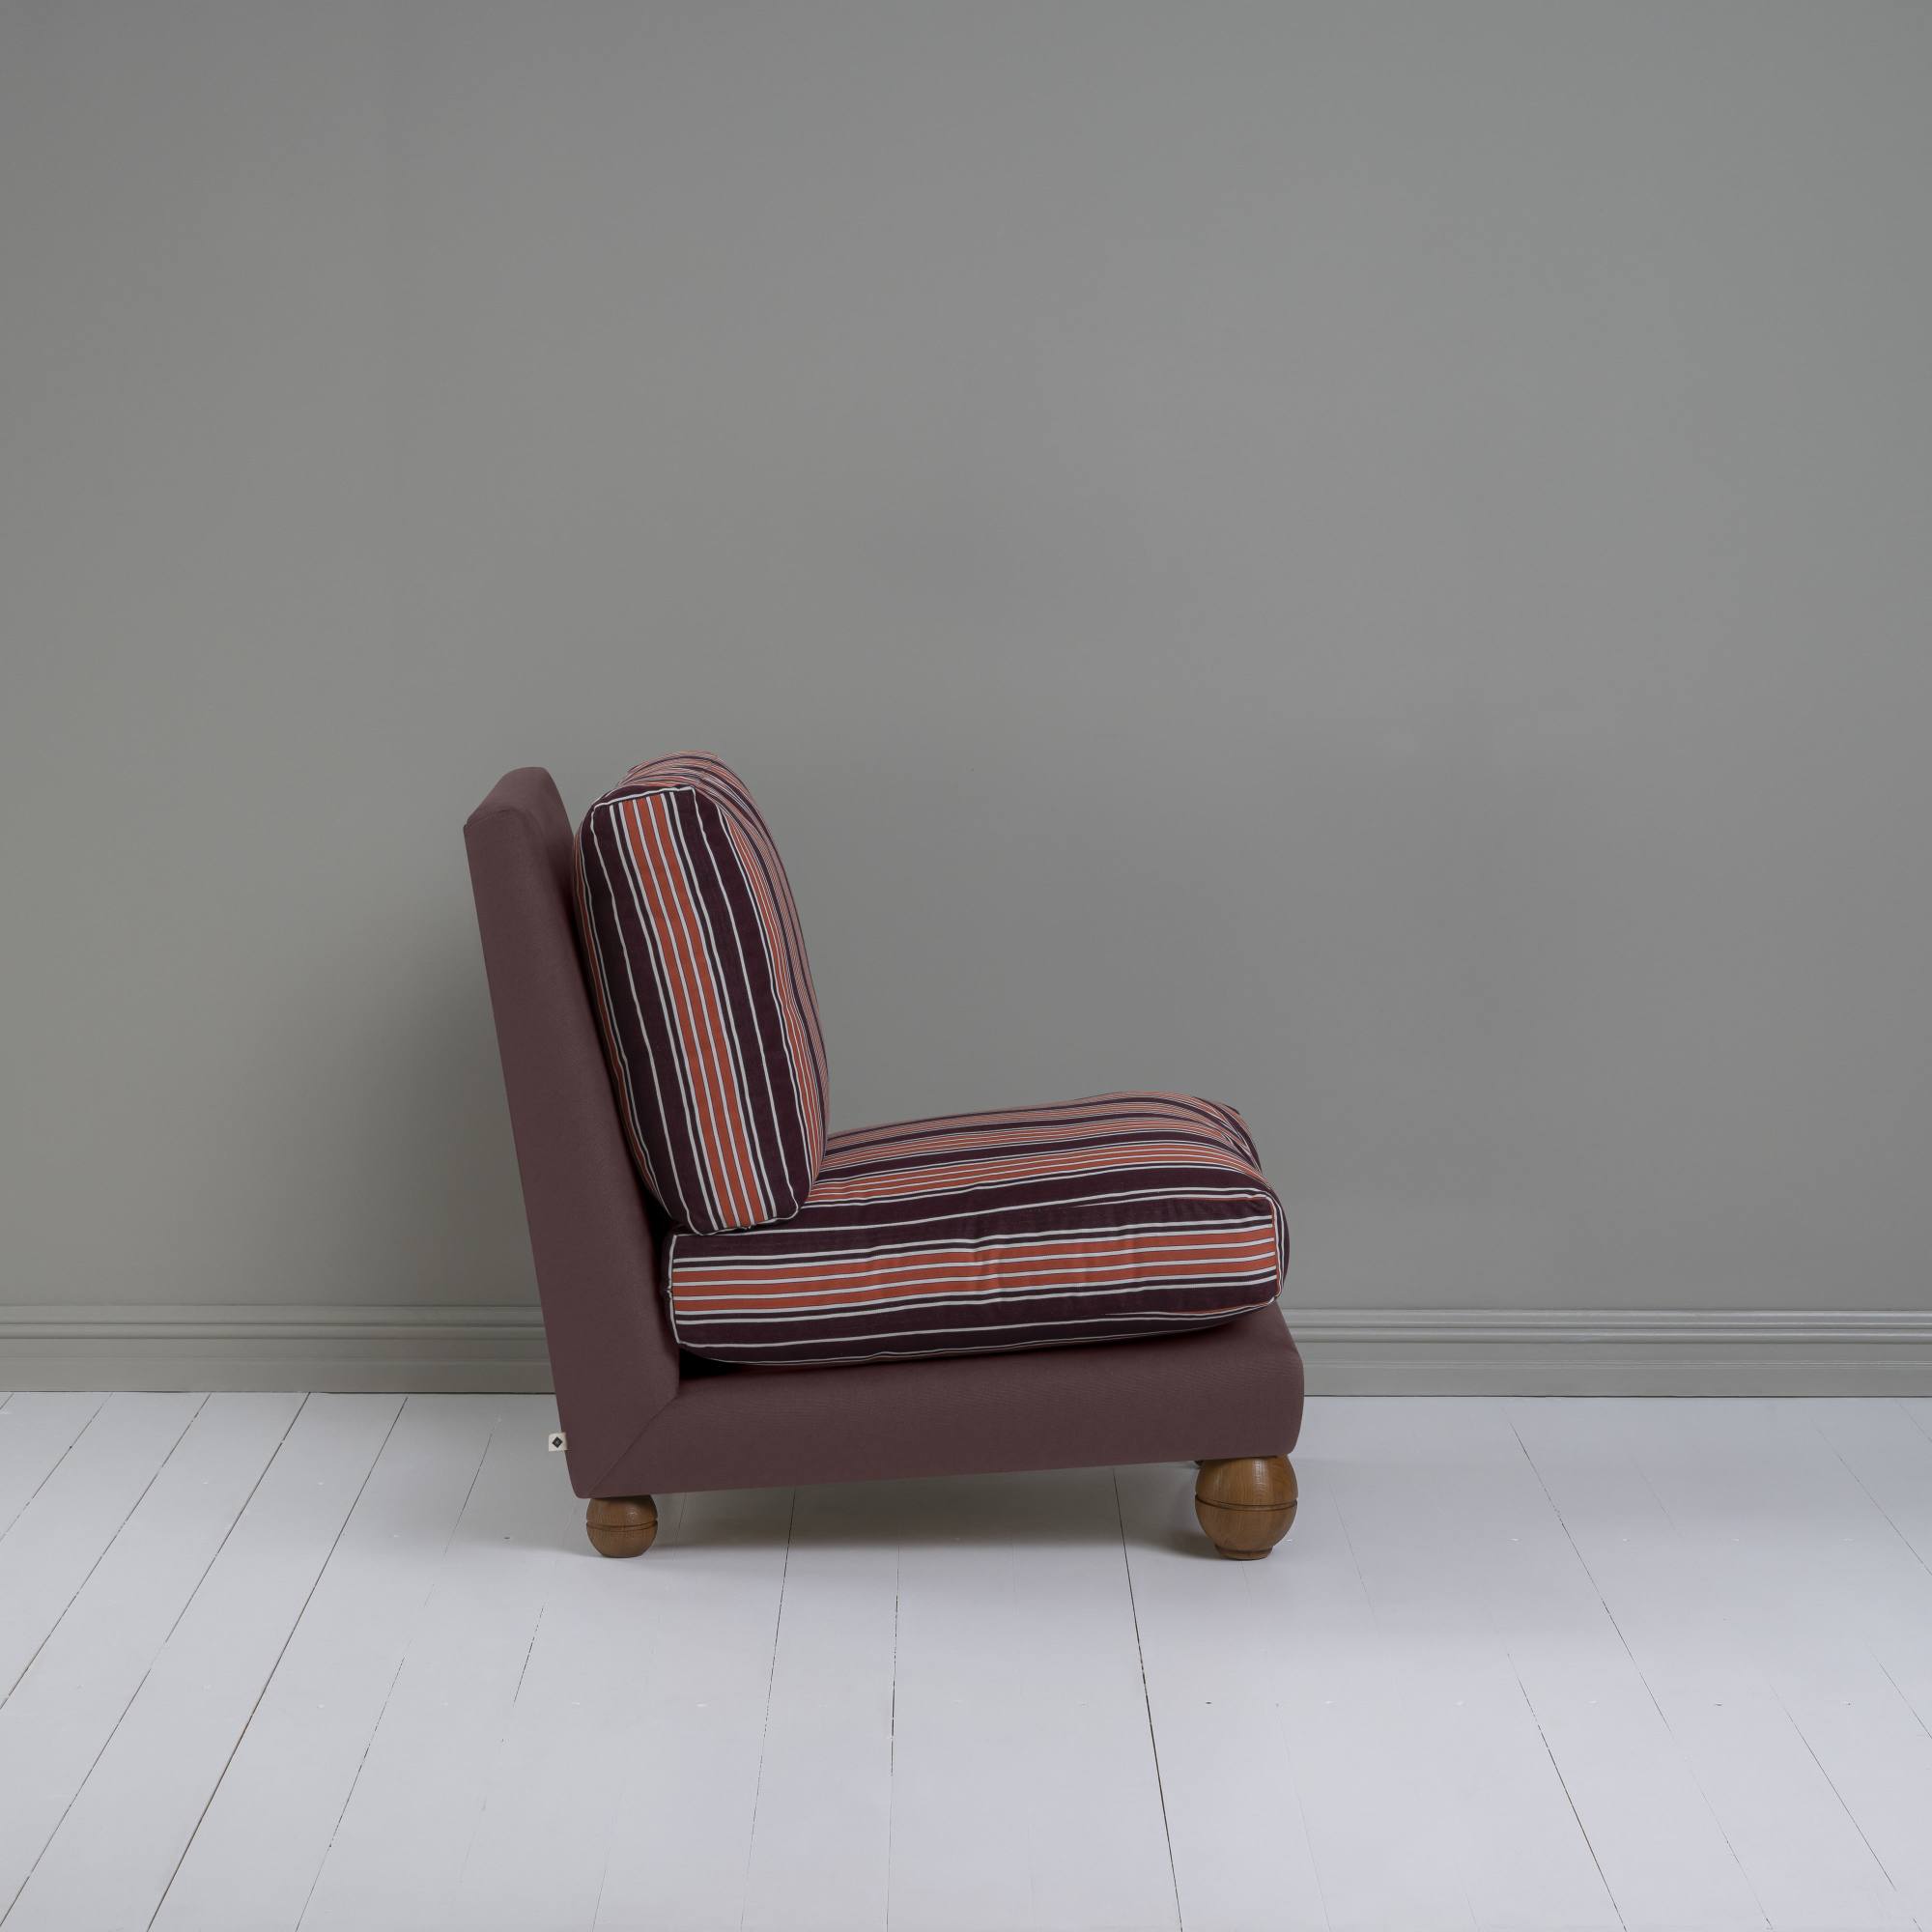  Perch Slipper Armchair in Laidback Linen Damson Frame, with Regatta Cotton, Flame Seat 